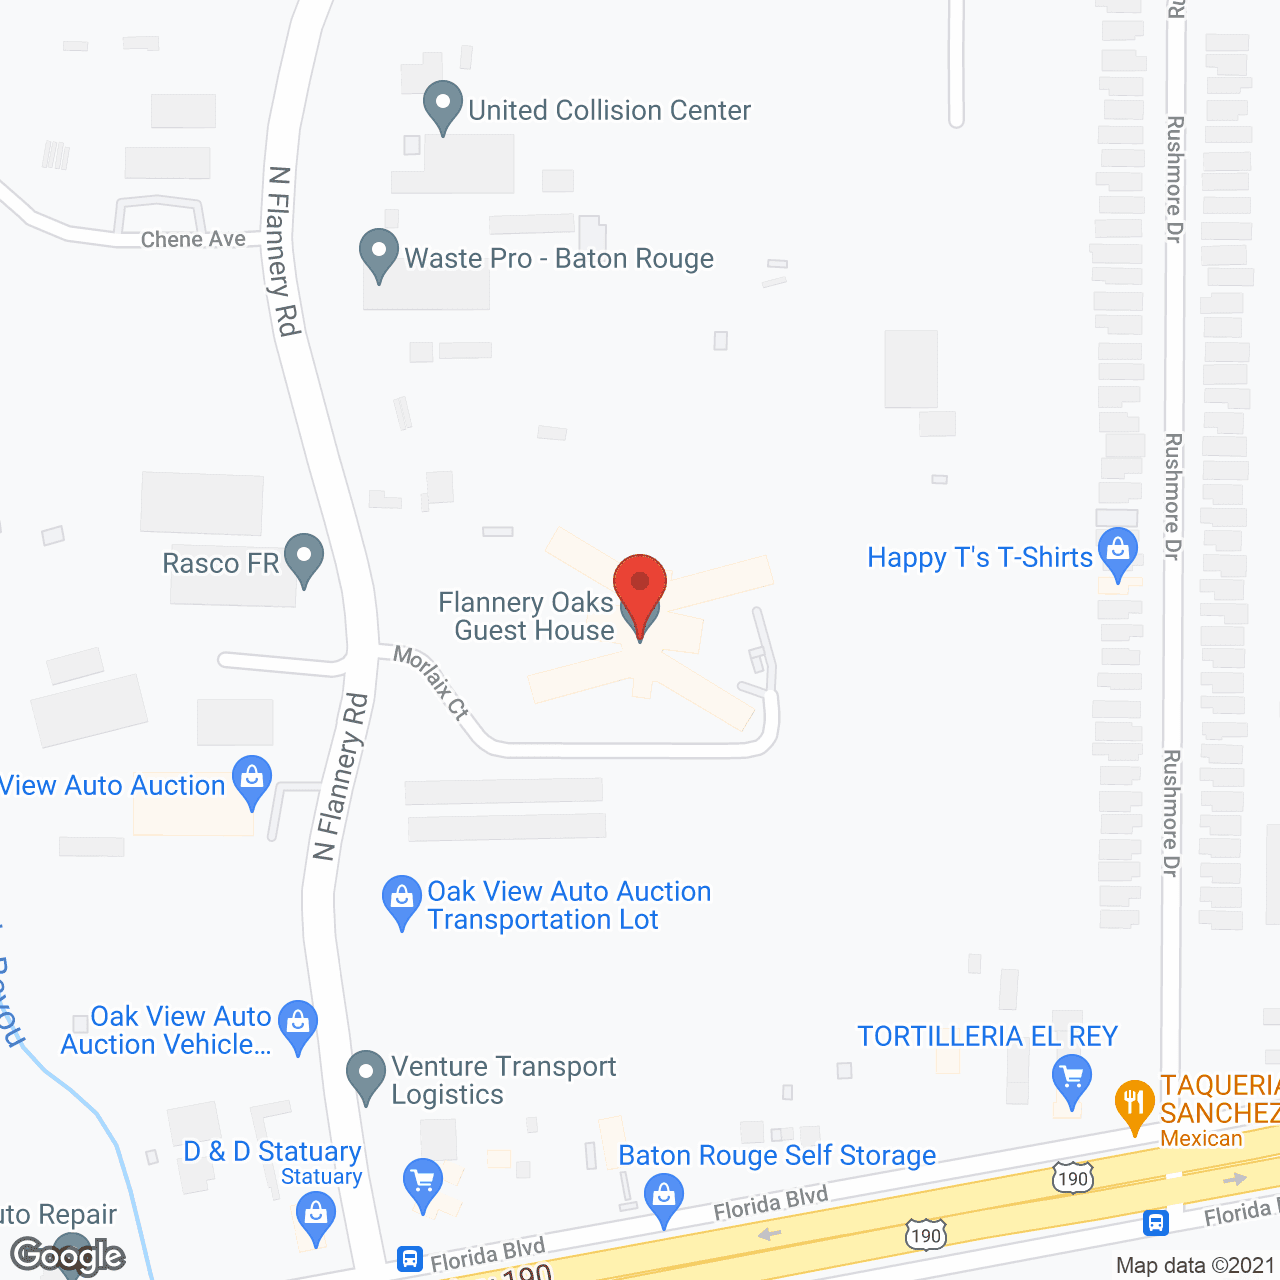 Flannery Oaks Guest House in google map